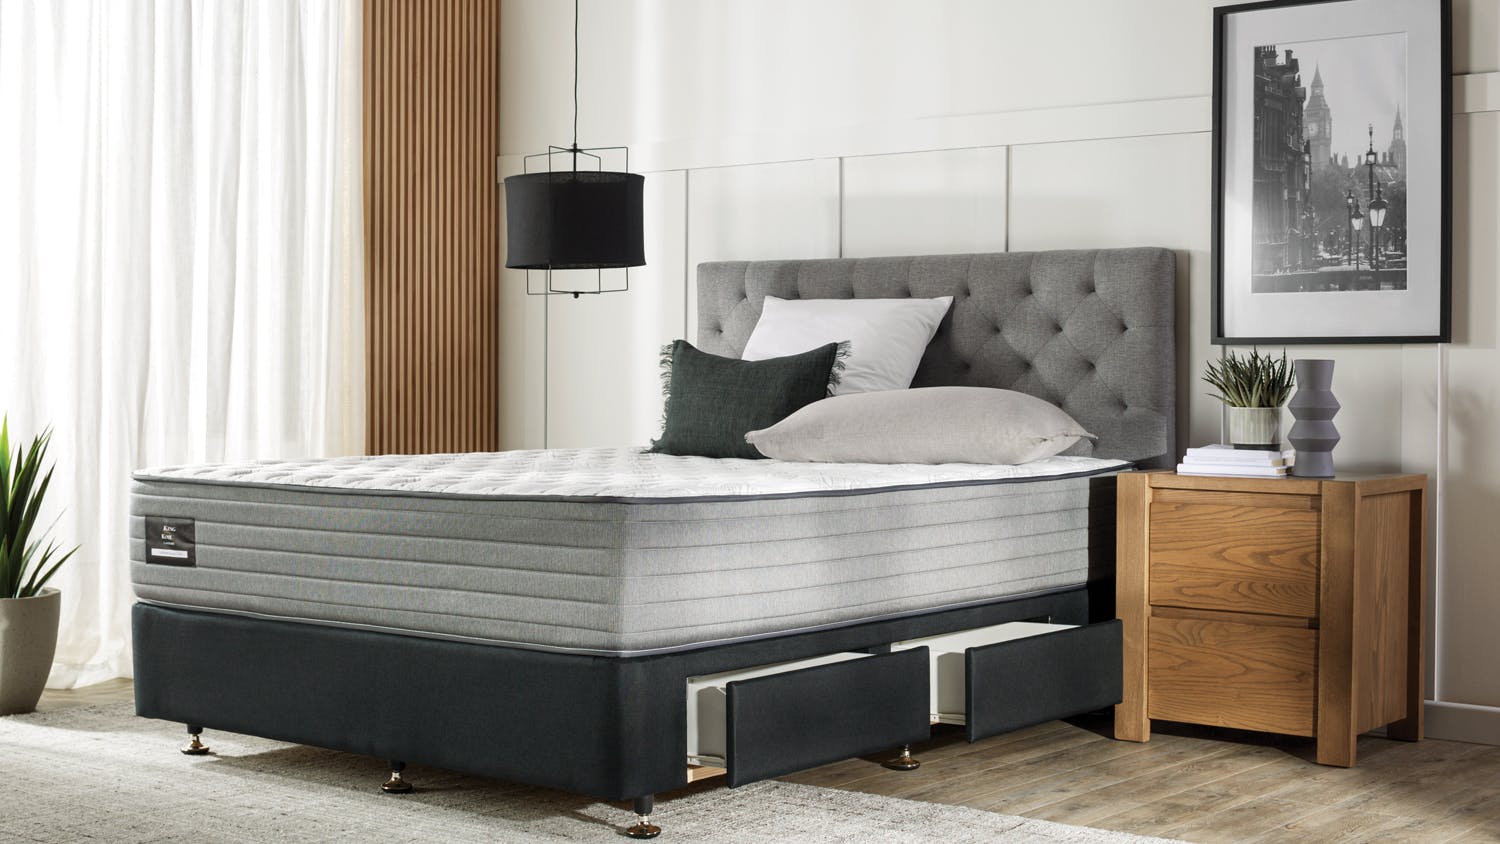 Conforma Deluxe II Firm Queen Mattress with Designer Black Drawer Bed Base